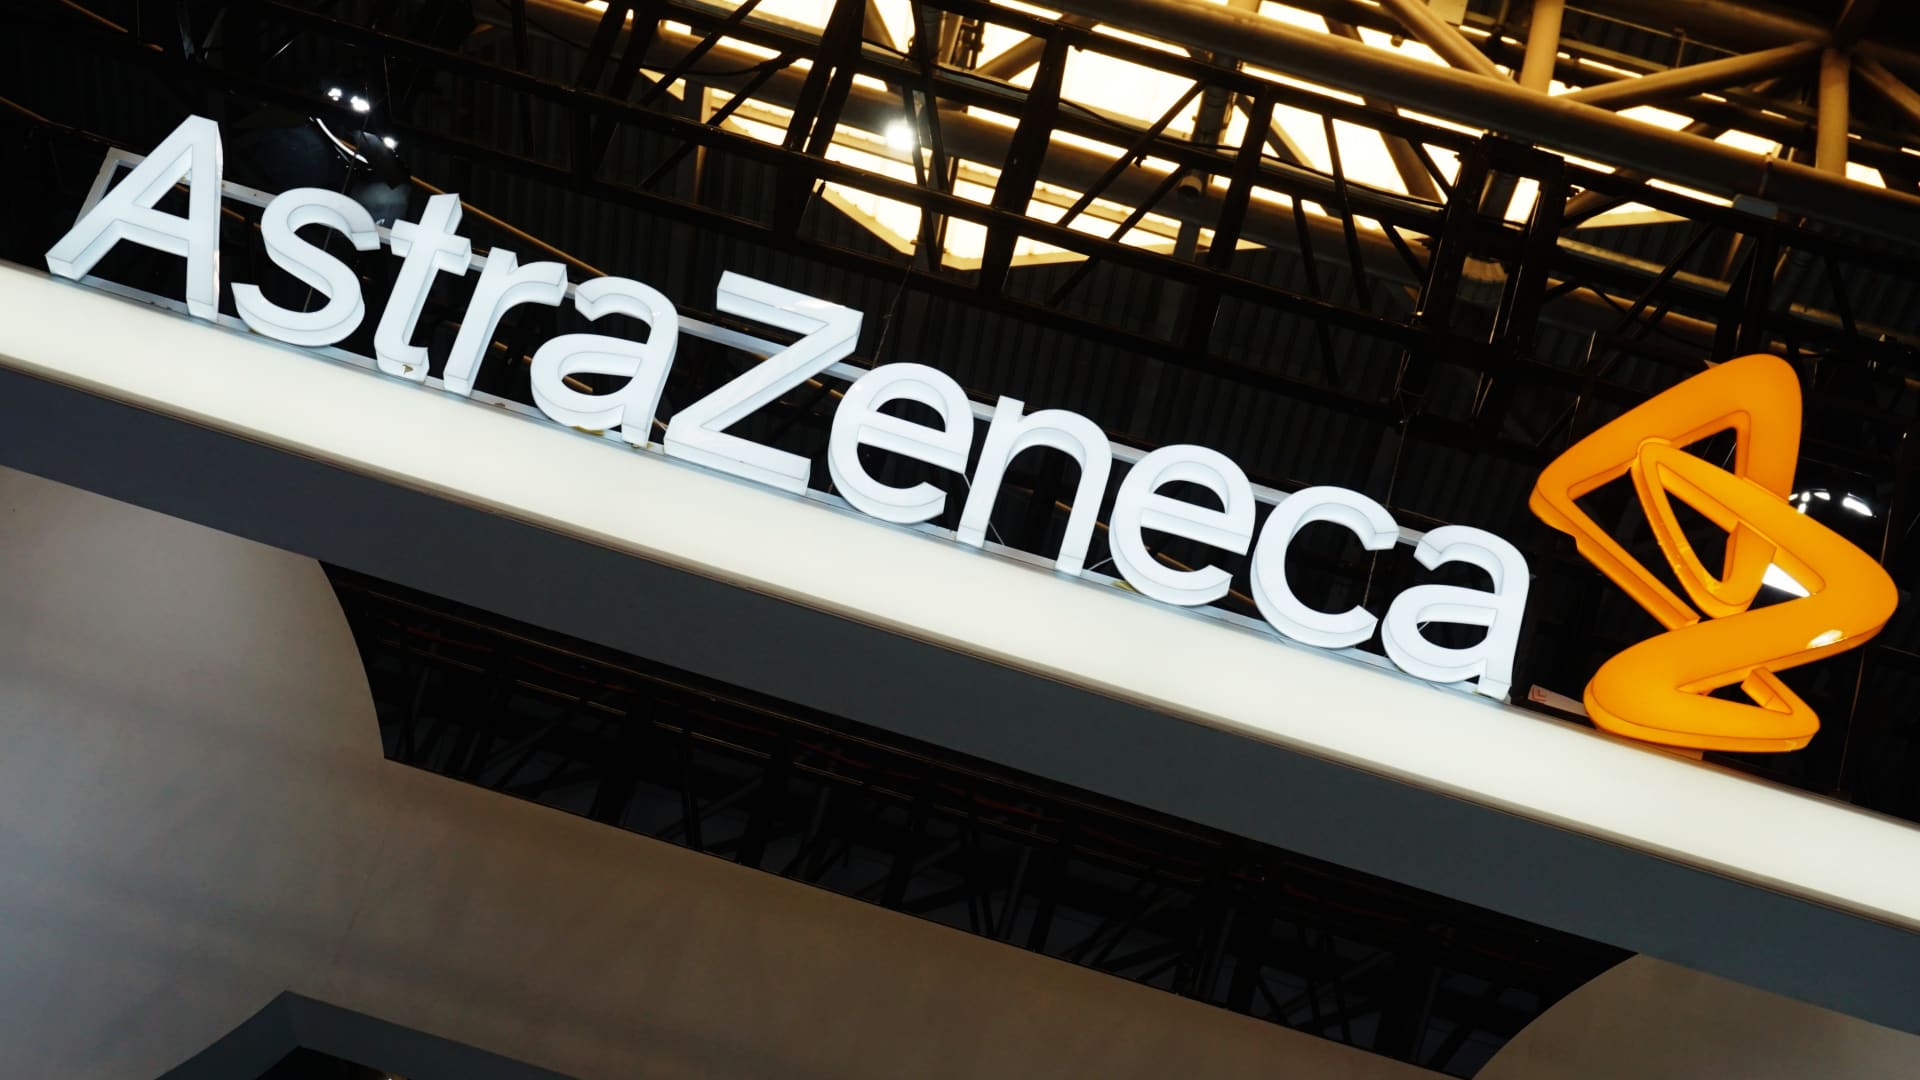 AstraZeneca to boost revenue, release new medicines by 2030 [Video]